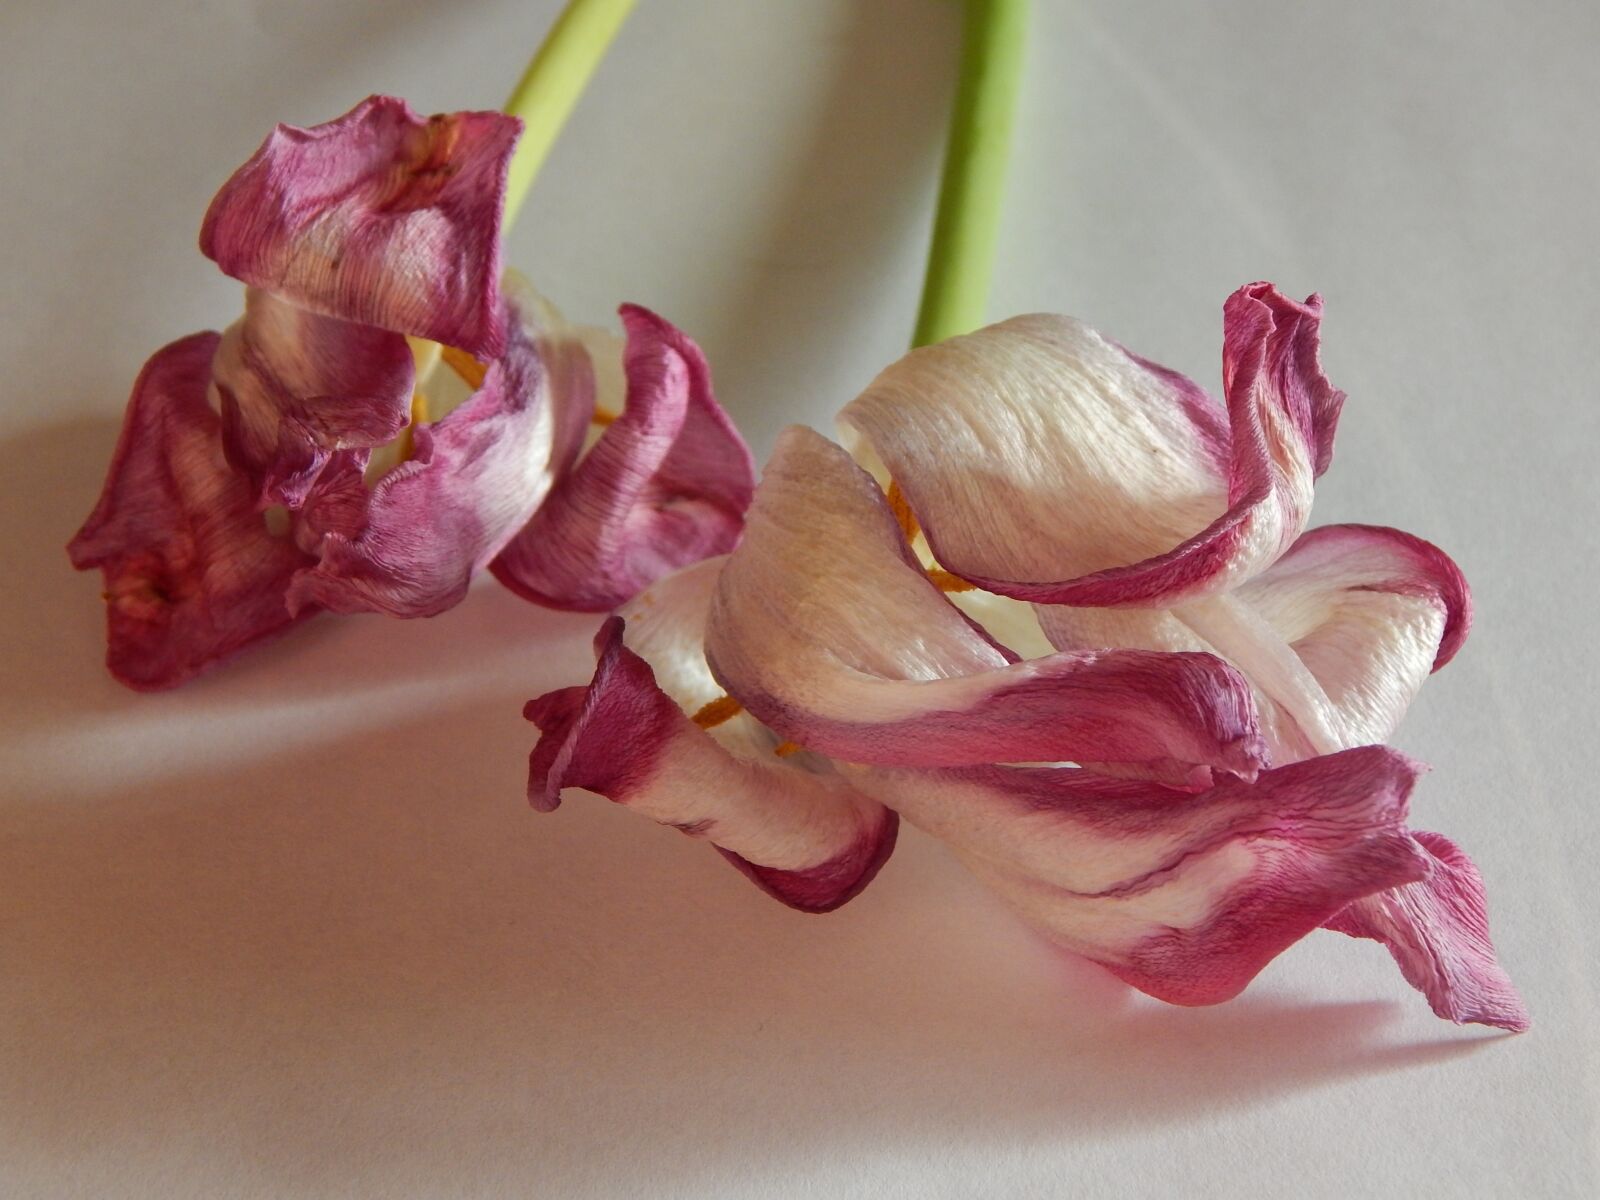 Nikon Coolpix L830 sample photo. Tulips, driedflowers, fading photography